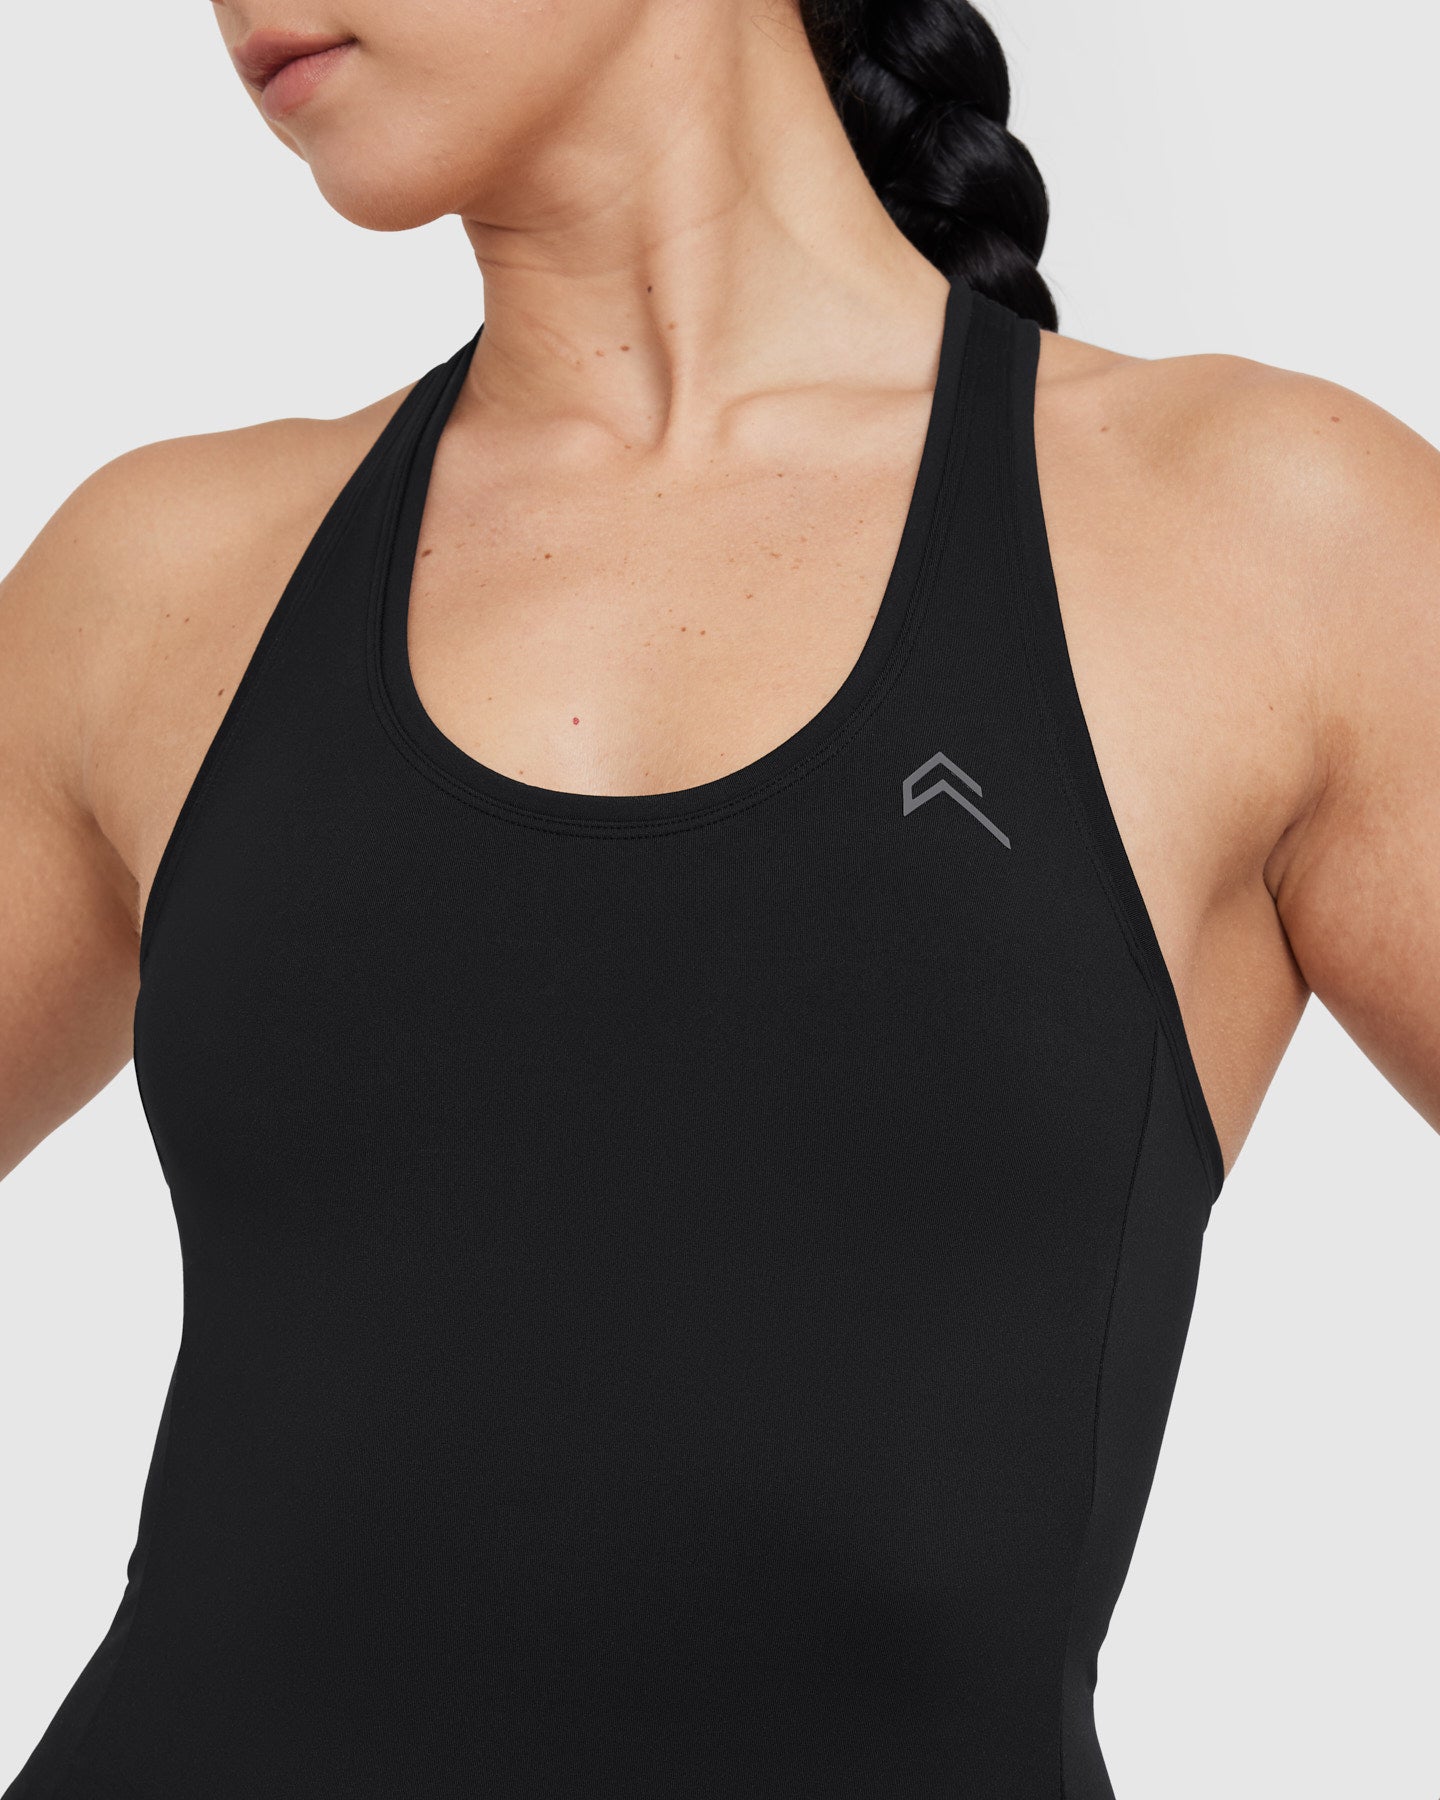 Niuer Women Jersey Tank Top Padded Shoulder Sleeveless Active Sportswear  Sports Vest Blouse Black XL(US 14-16)